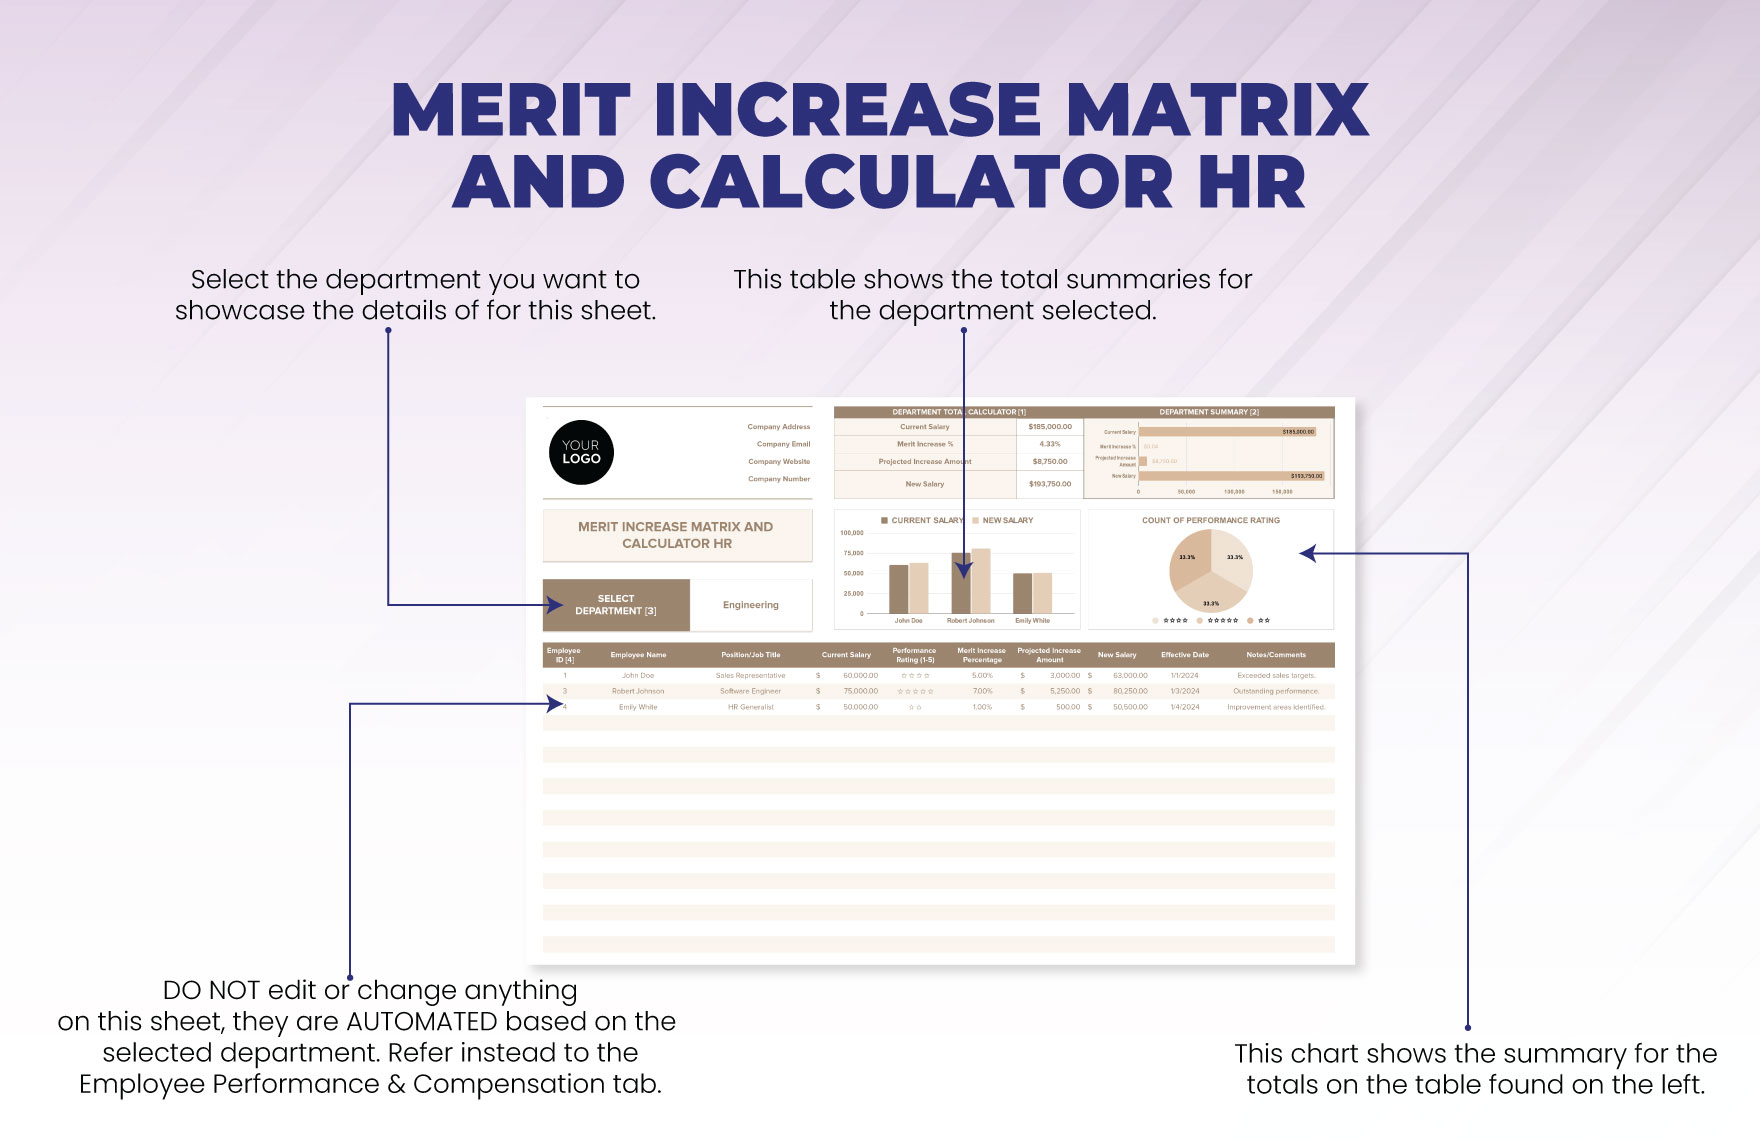 Merit Increase Matrix and Calculator HR Template